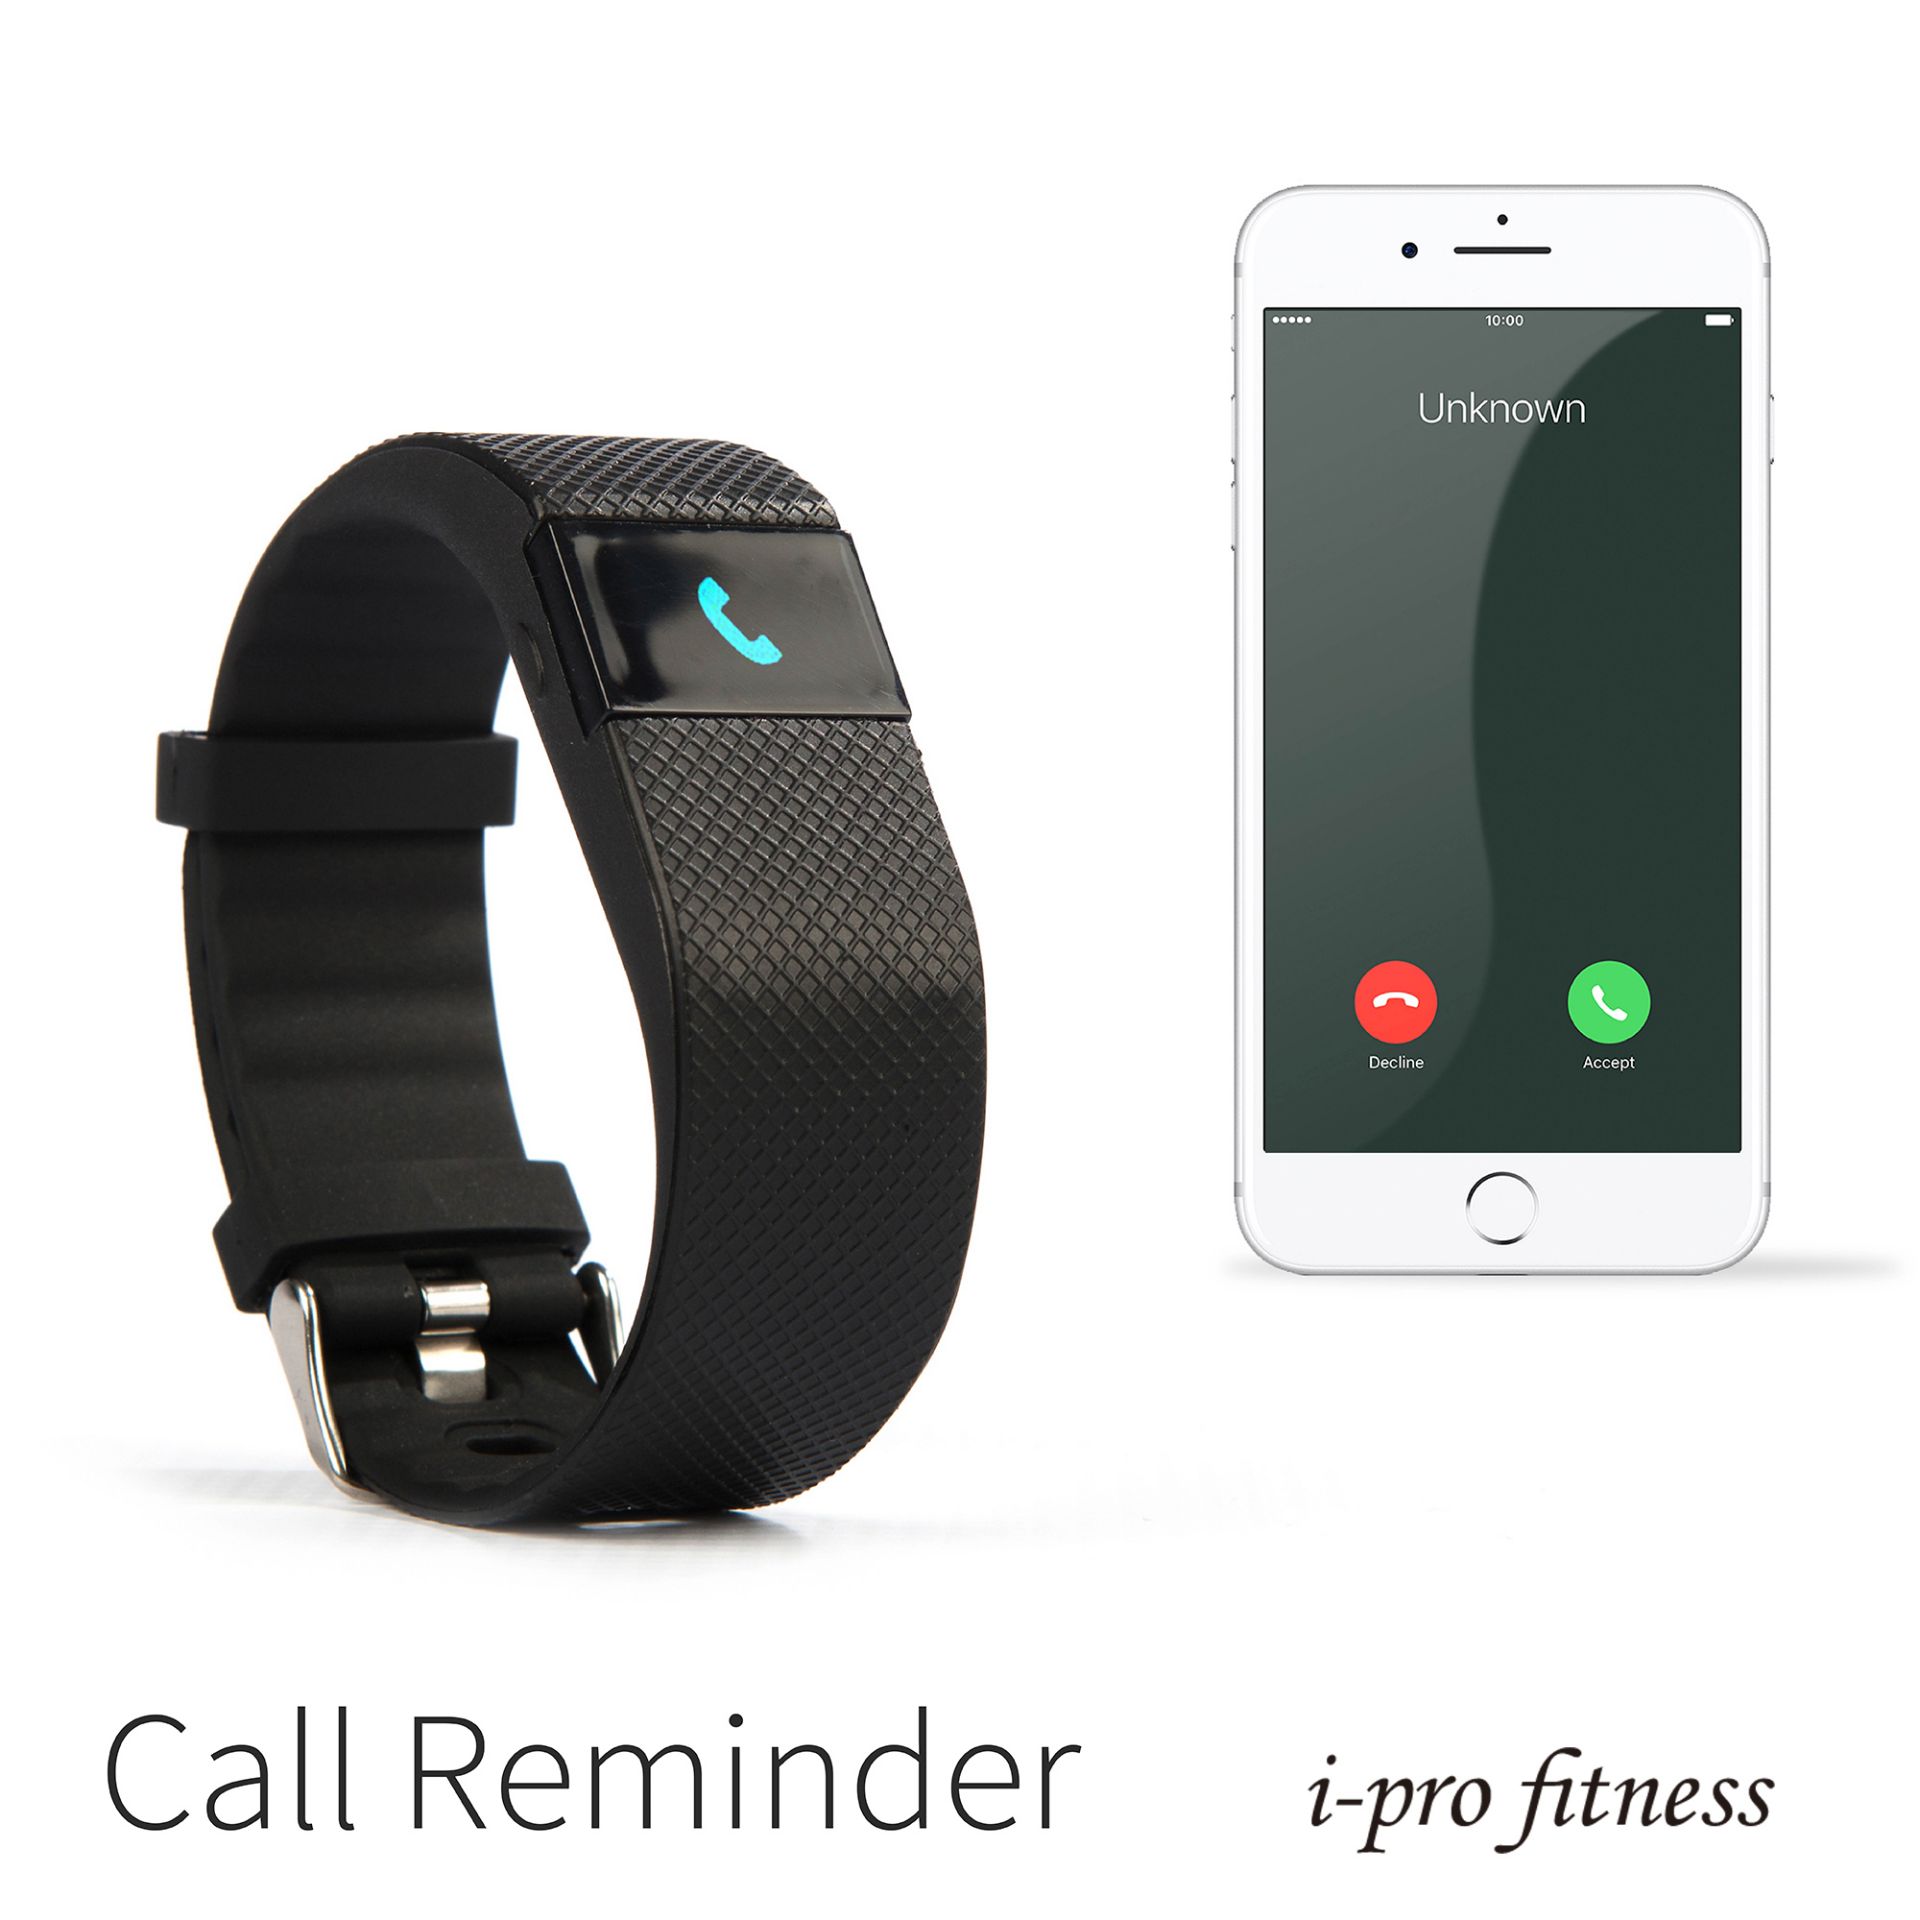 Fitness Tracker i-pro fitness, Bluetooth 4.0 Sports Smart Bracelet, Heart Rate Monitor, Pedometer. - Image 2 of 8